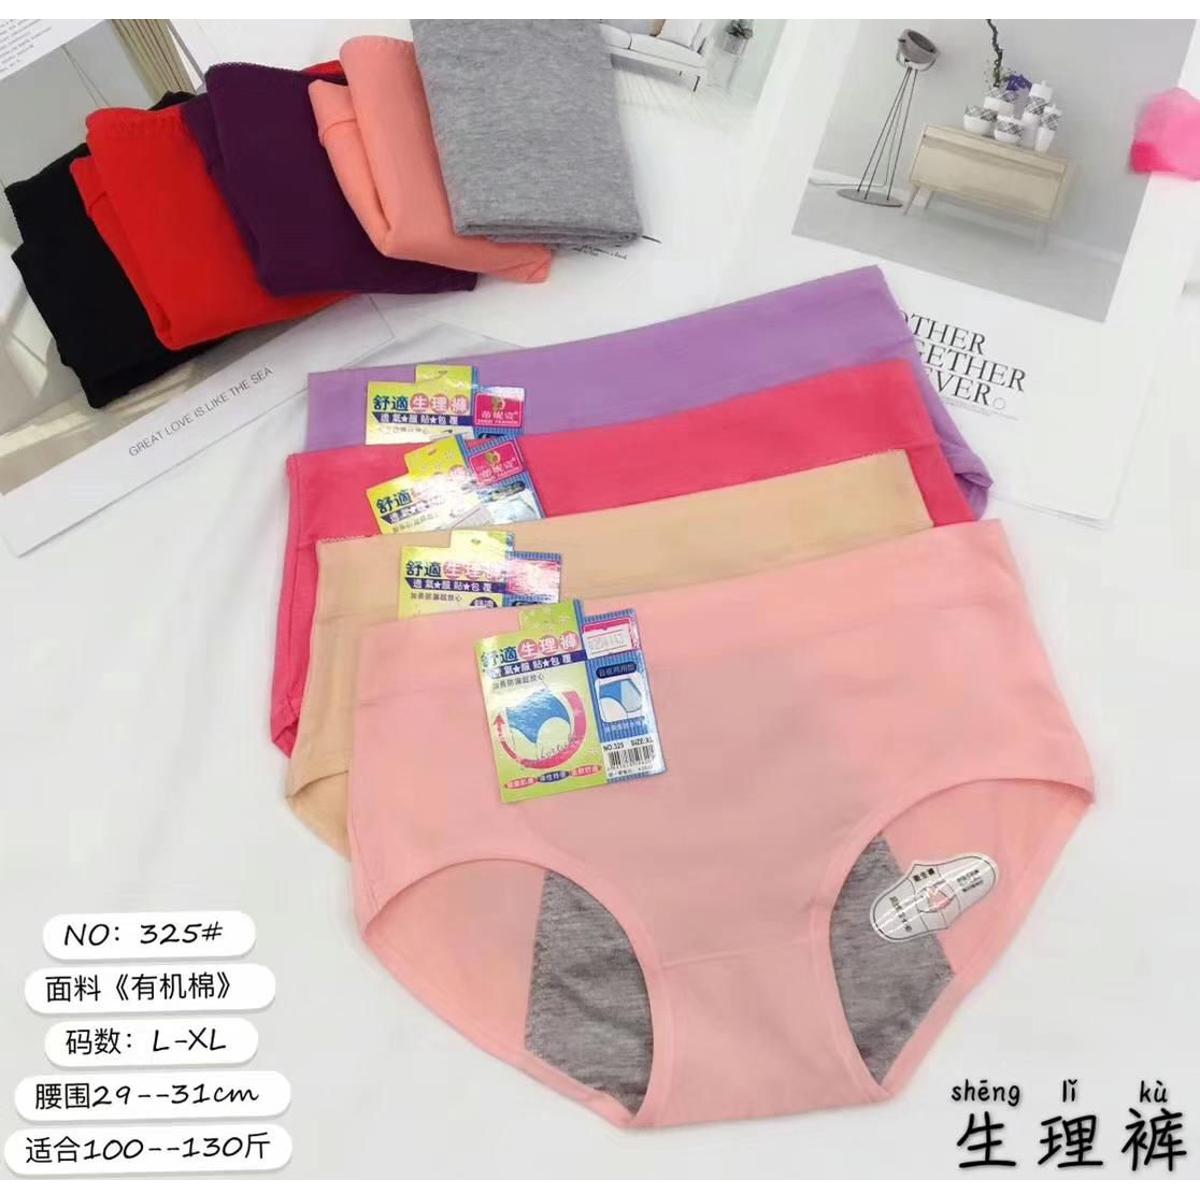 Women Leak Proof Menstrual Panties Soft Breathable, Lady Period Cotton Waterproof  Underwear, Underpants For Girls Multicolor